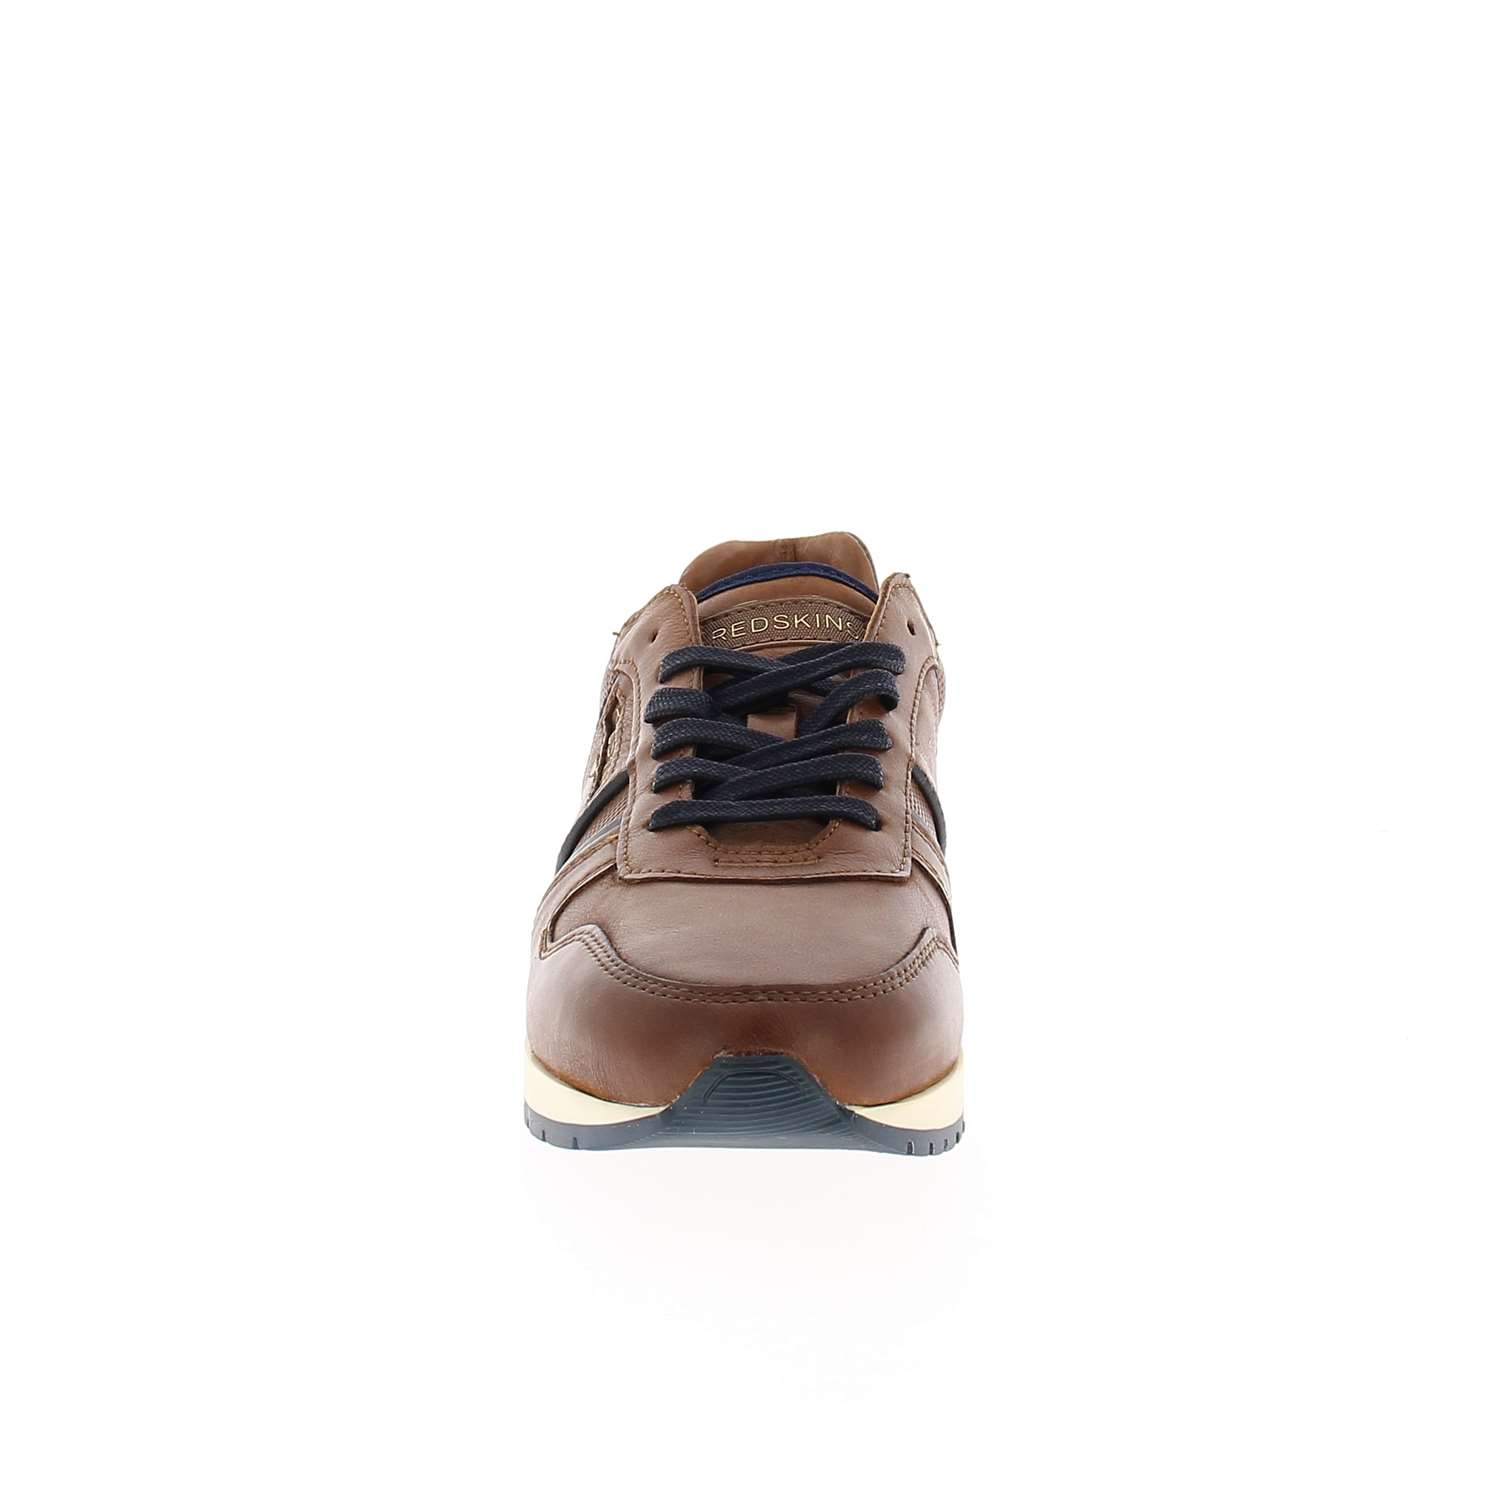 03 - AFFAIRO - CLEON - Chaussures à lacets - Cuir